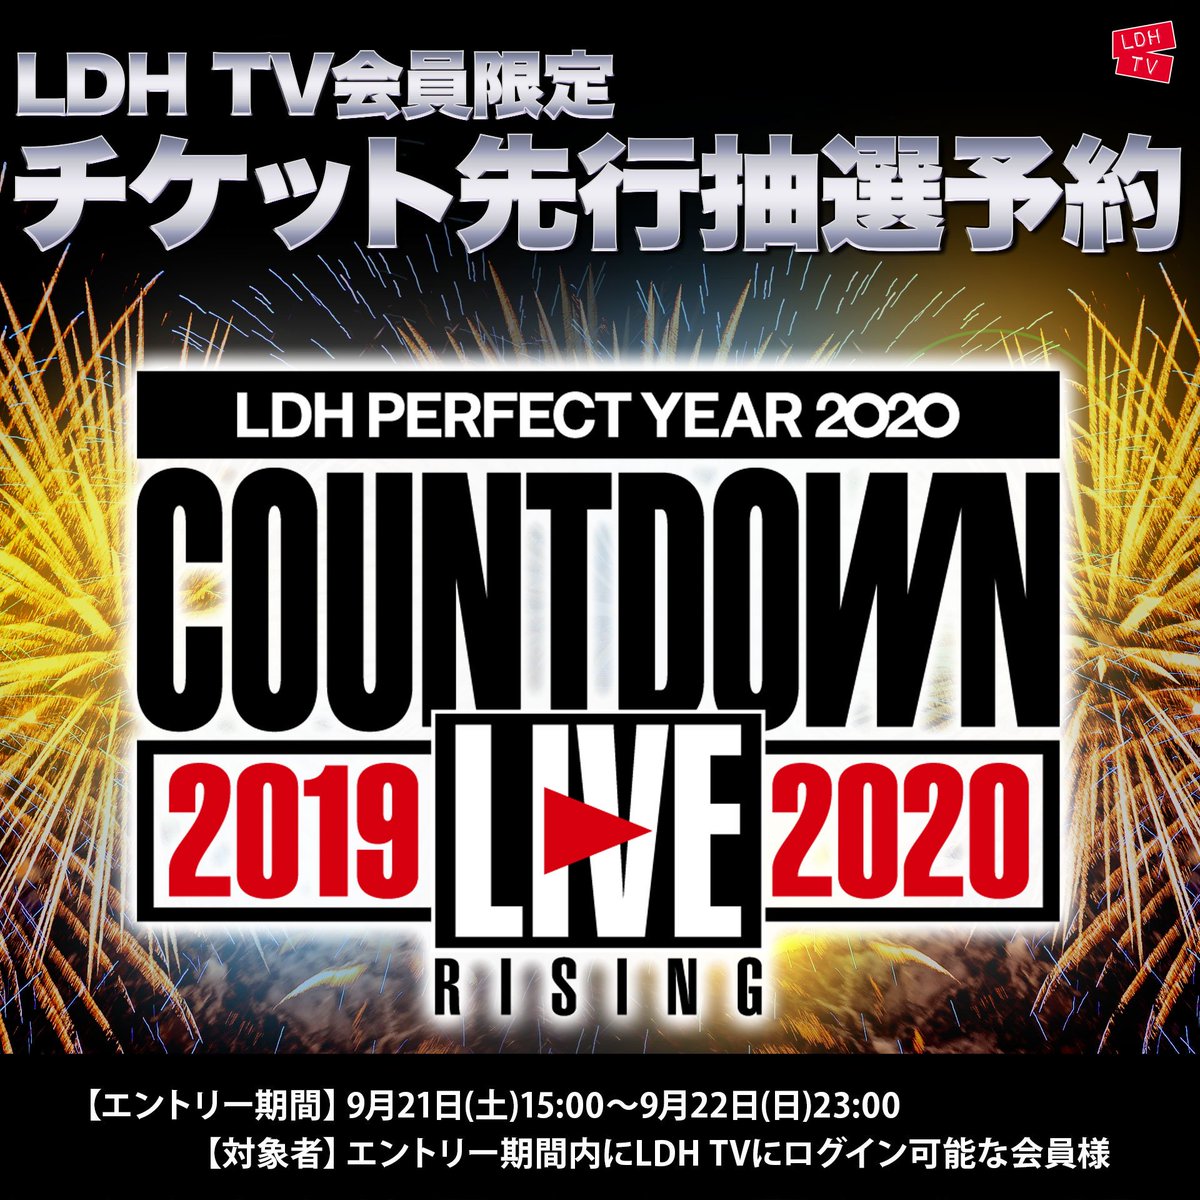 Cl 公式 Ldh Tv会員限定 Ldh Perfect Year Countdown Live 19 Rising Ldh Tvチケット先行抽選予約は9 21 土 15 00からエントリースタート エントリー期間 9 21 土 15 00 9 22 日 23 00 対象者 エントリー期間内にldh